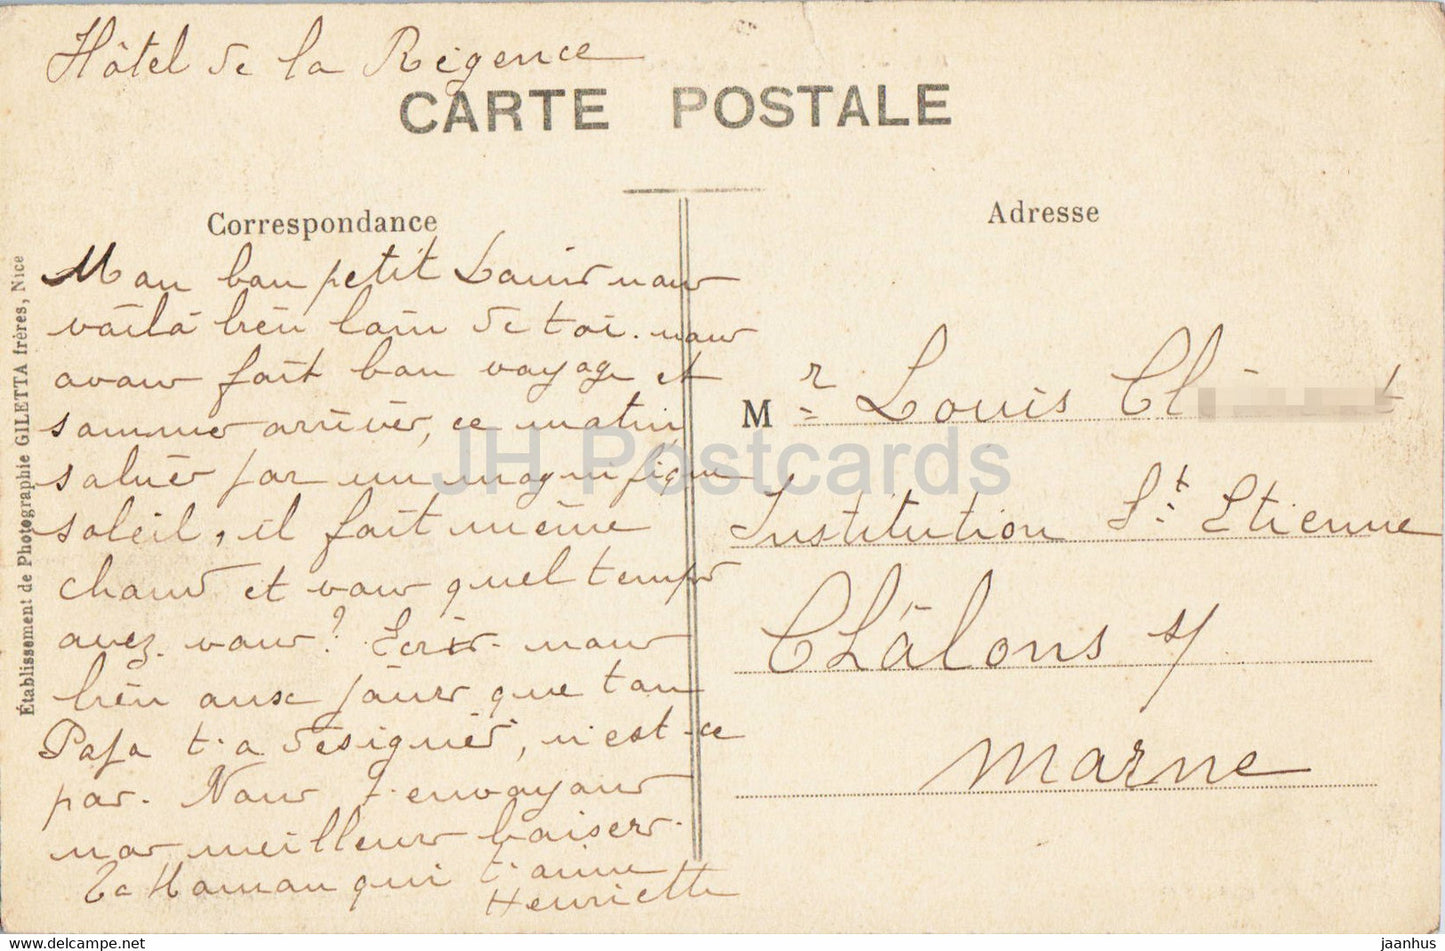 Nizza - Le Jardin Public - 82 - alte Postkarte - Frankreich - gebraucht